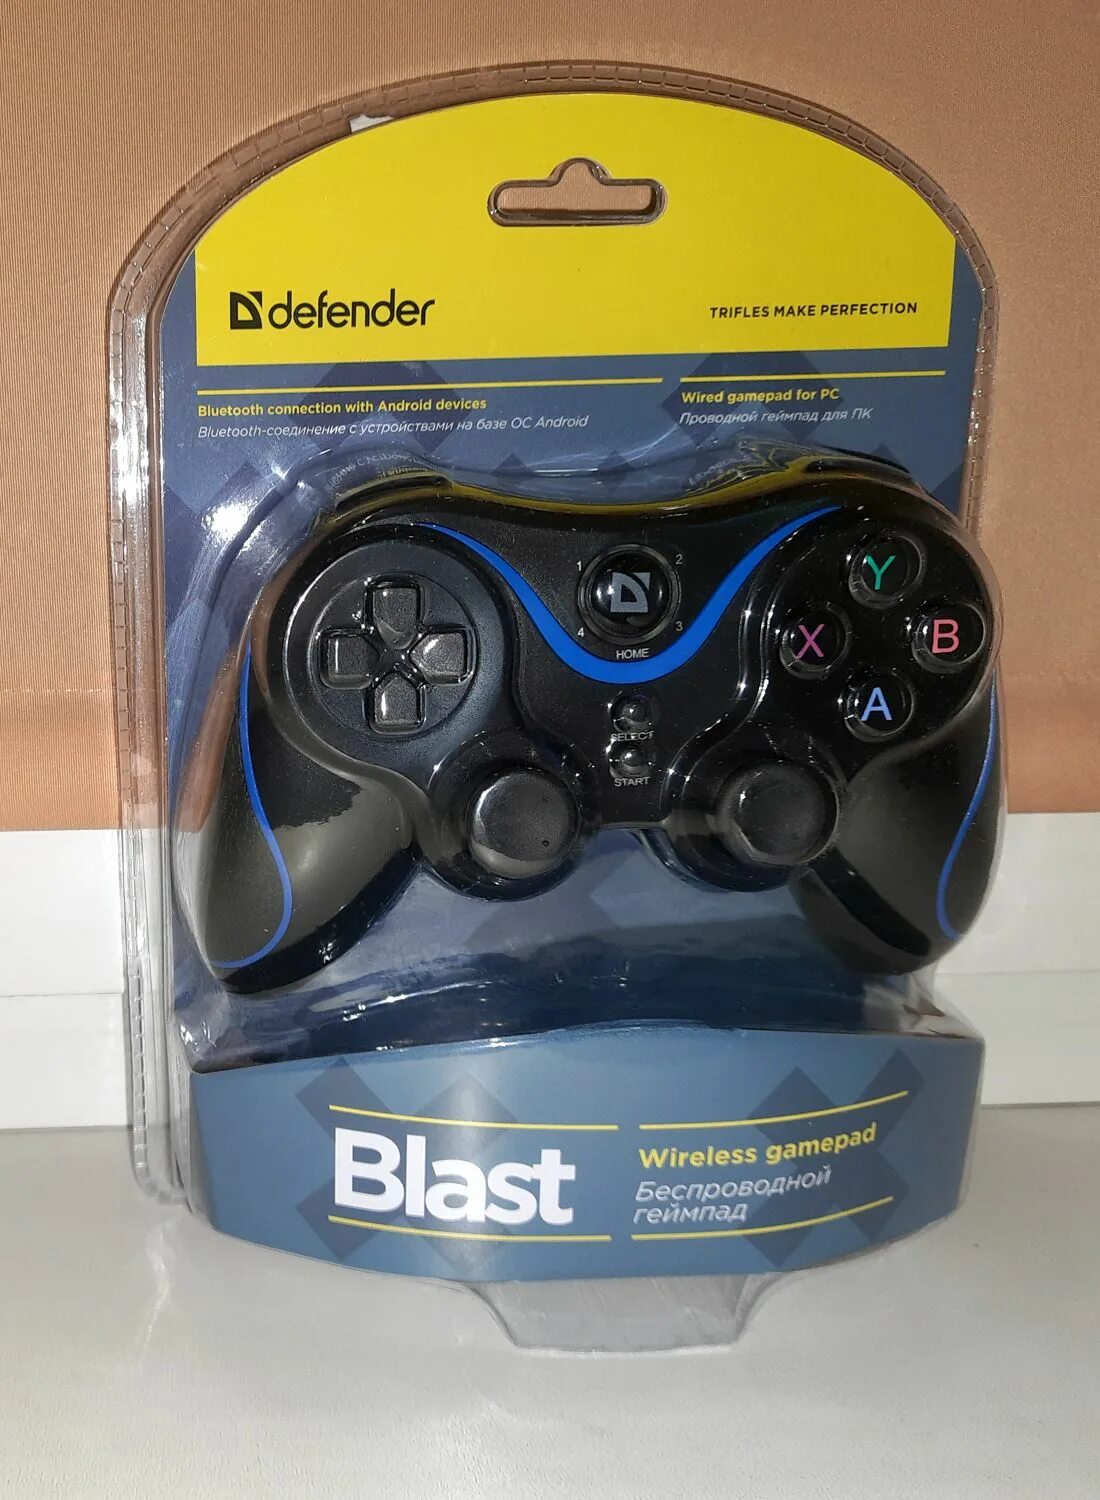 Геймпад Defender 64285. Беспроводной геймпад Defender Blast. Defender Blast (64285) Wireless Gamepad. Defender Blast USB, Bluetooth, Android, li-ion [64285] {геймпад беспроводной}.